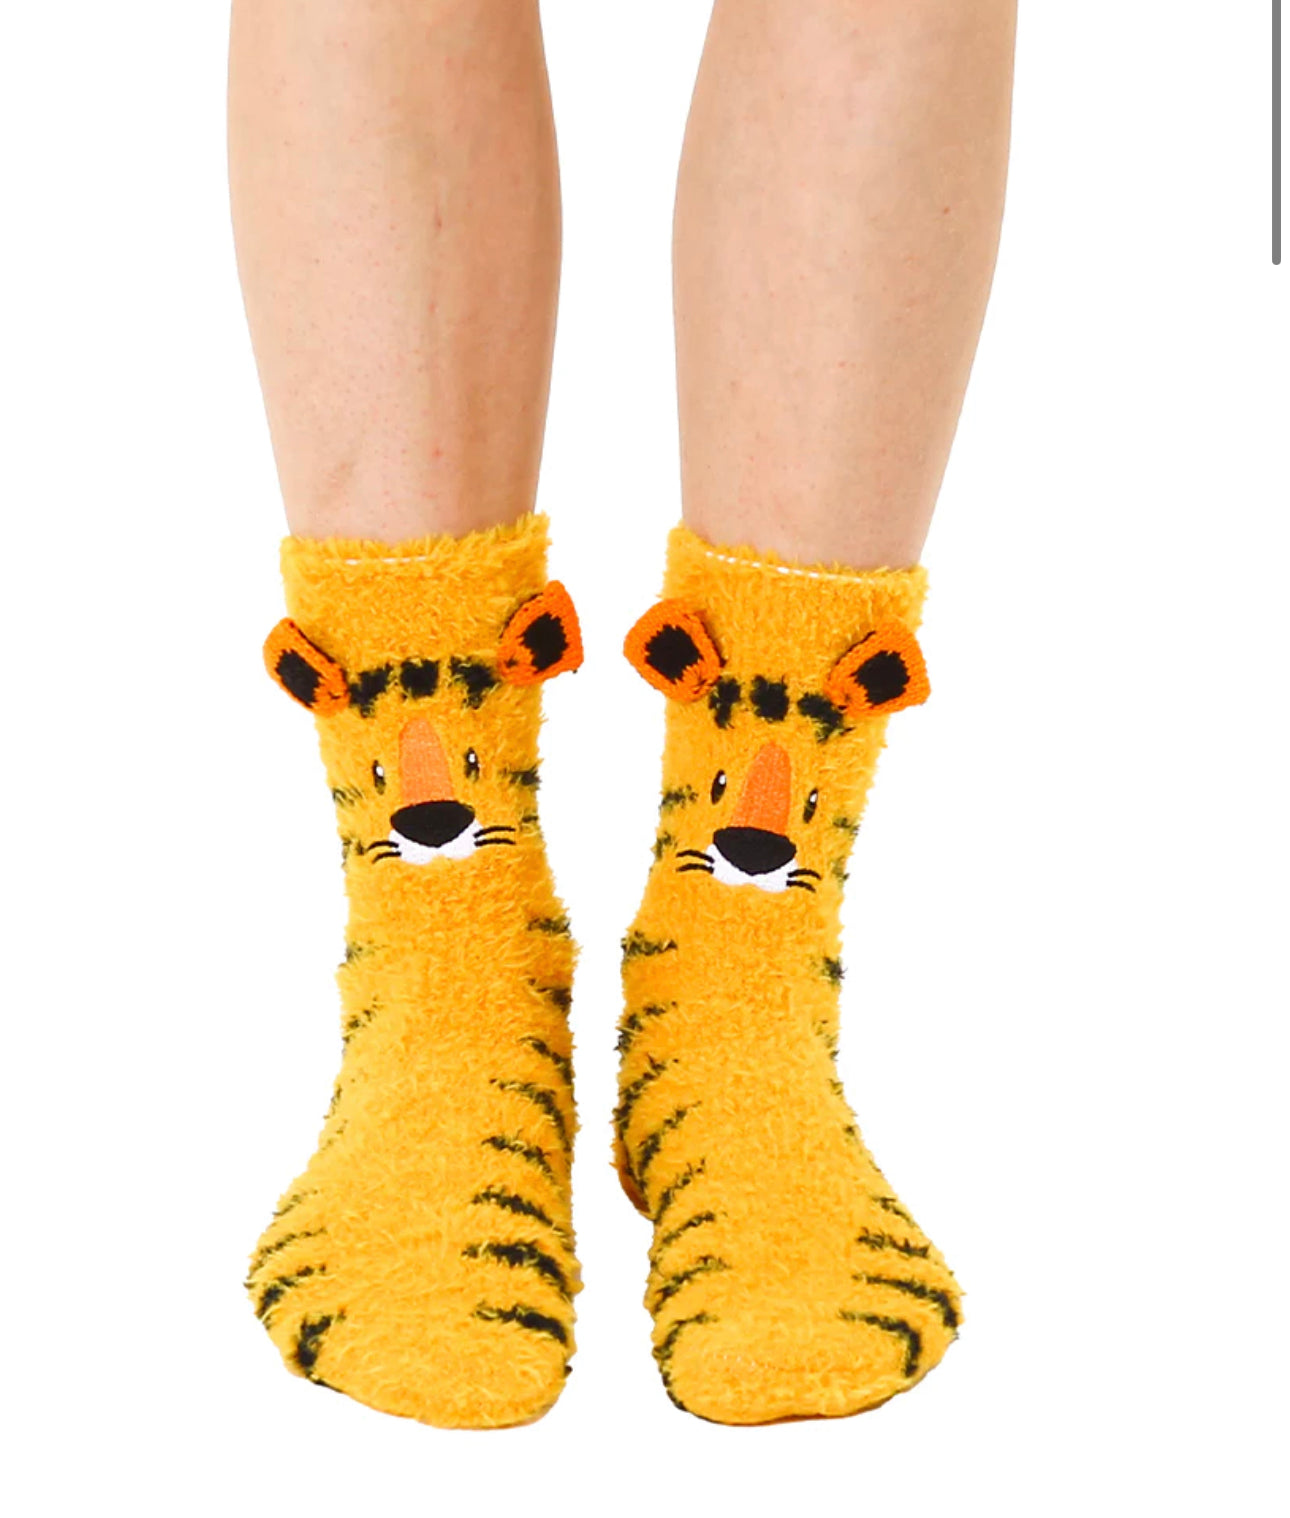 Living Royal Fuzzy Crew Socks